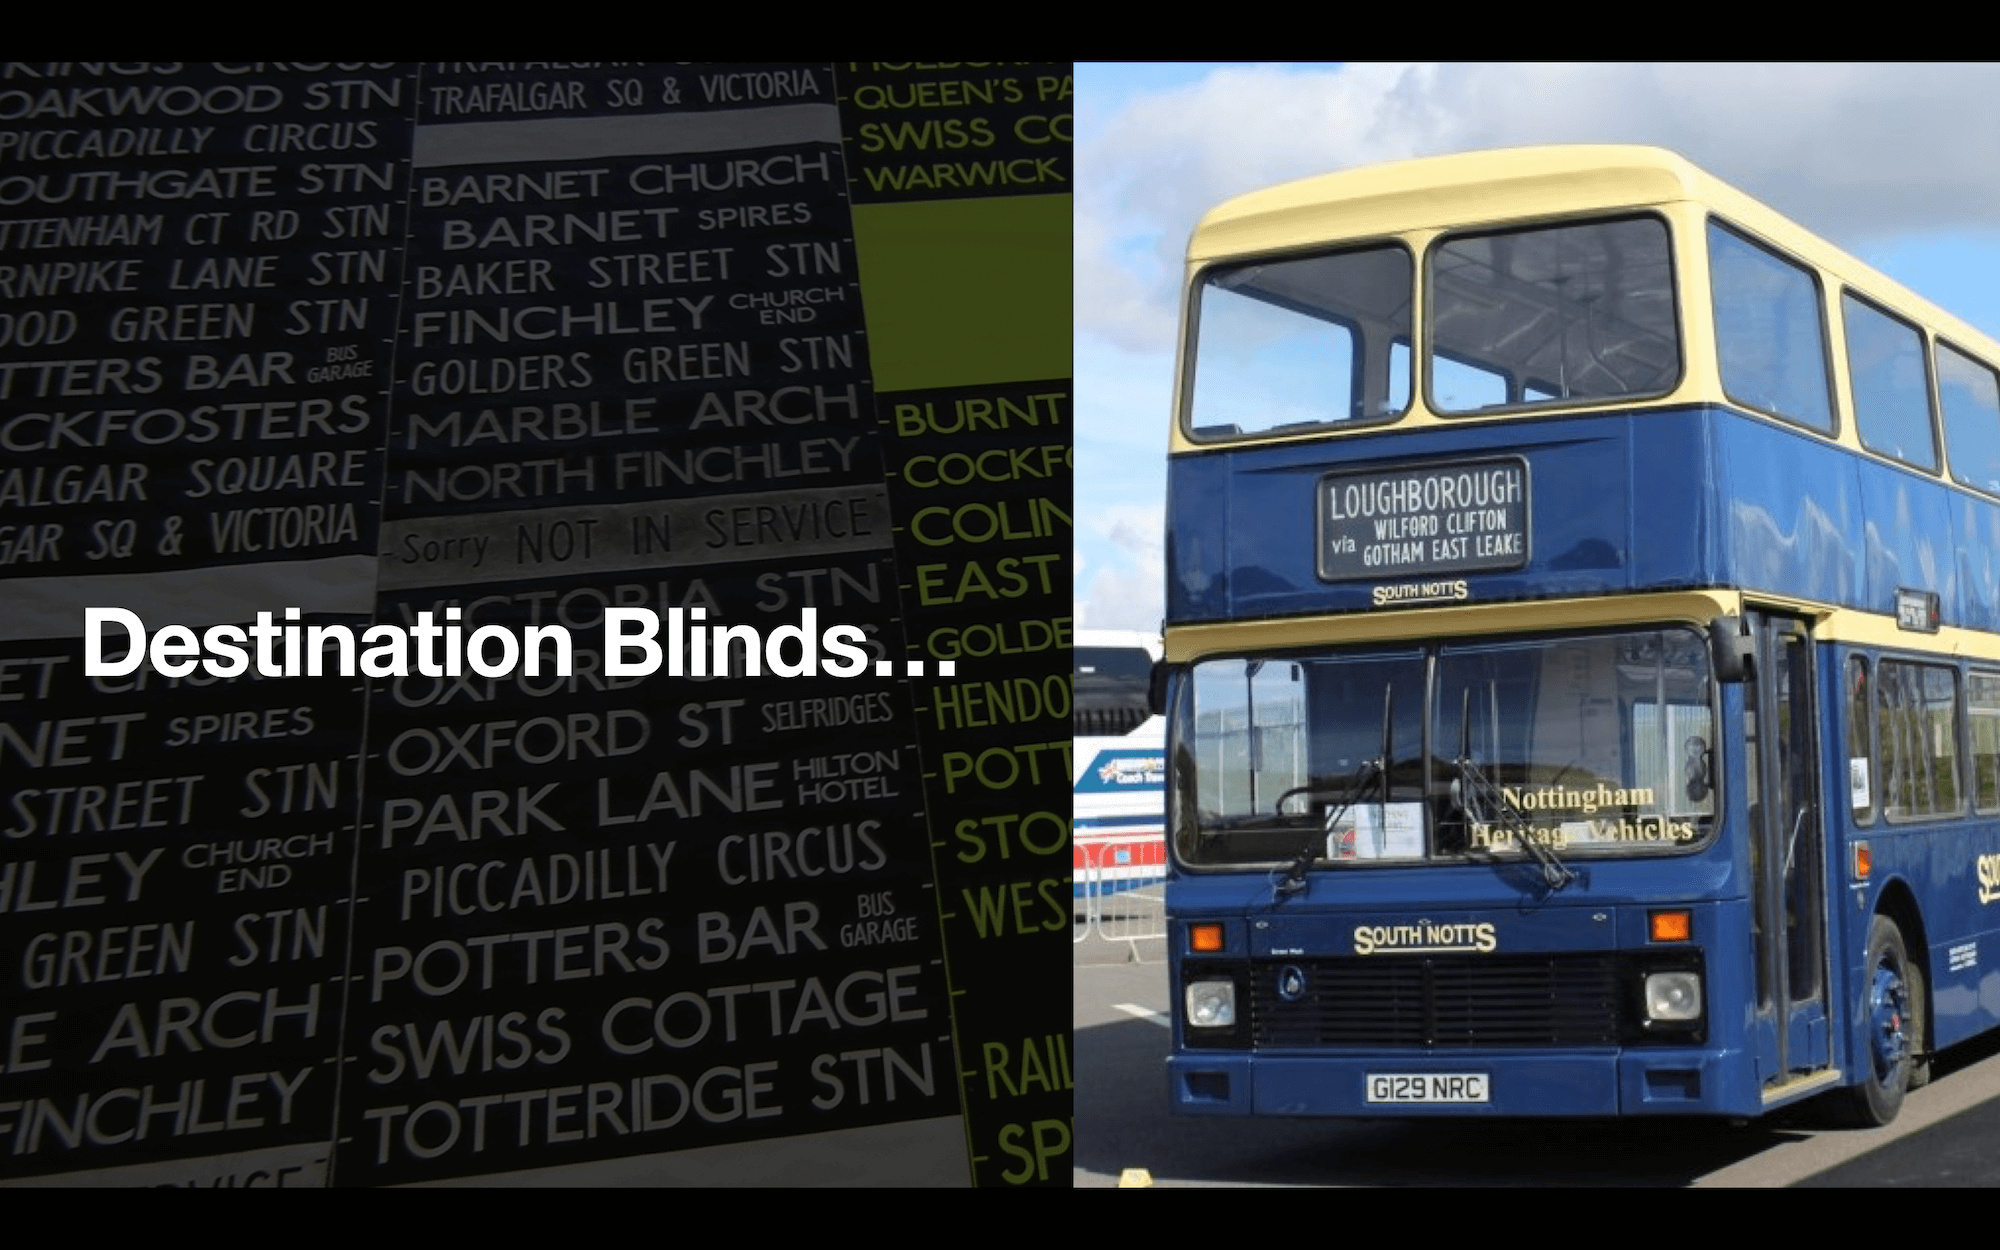 Bus with destination blind